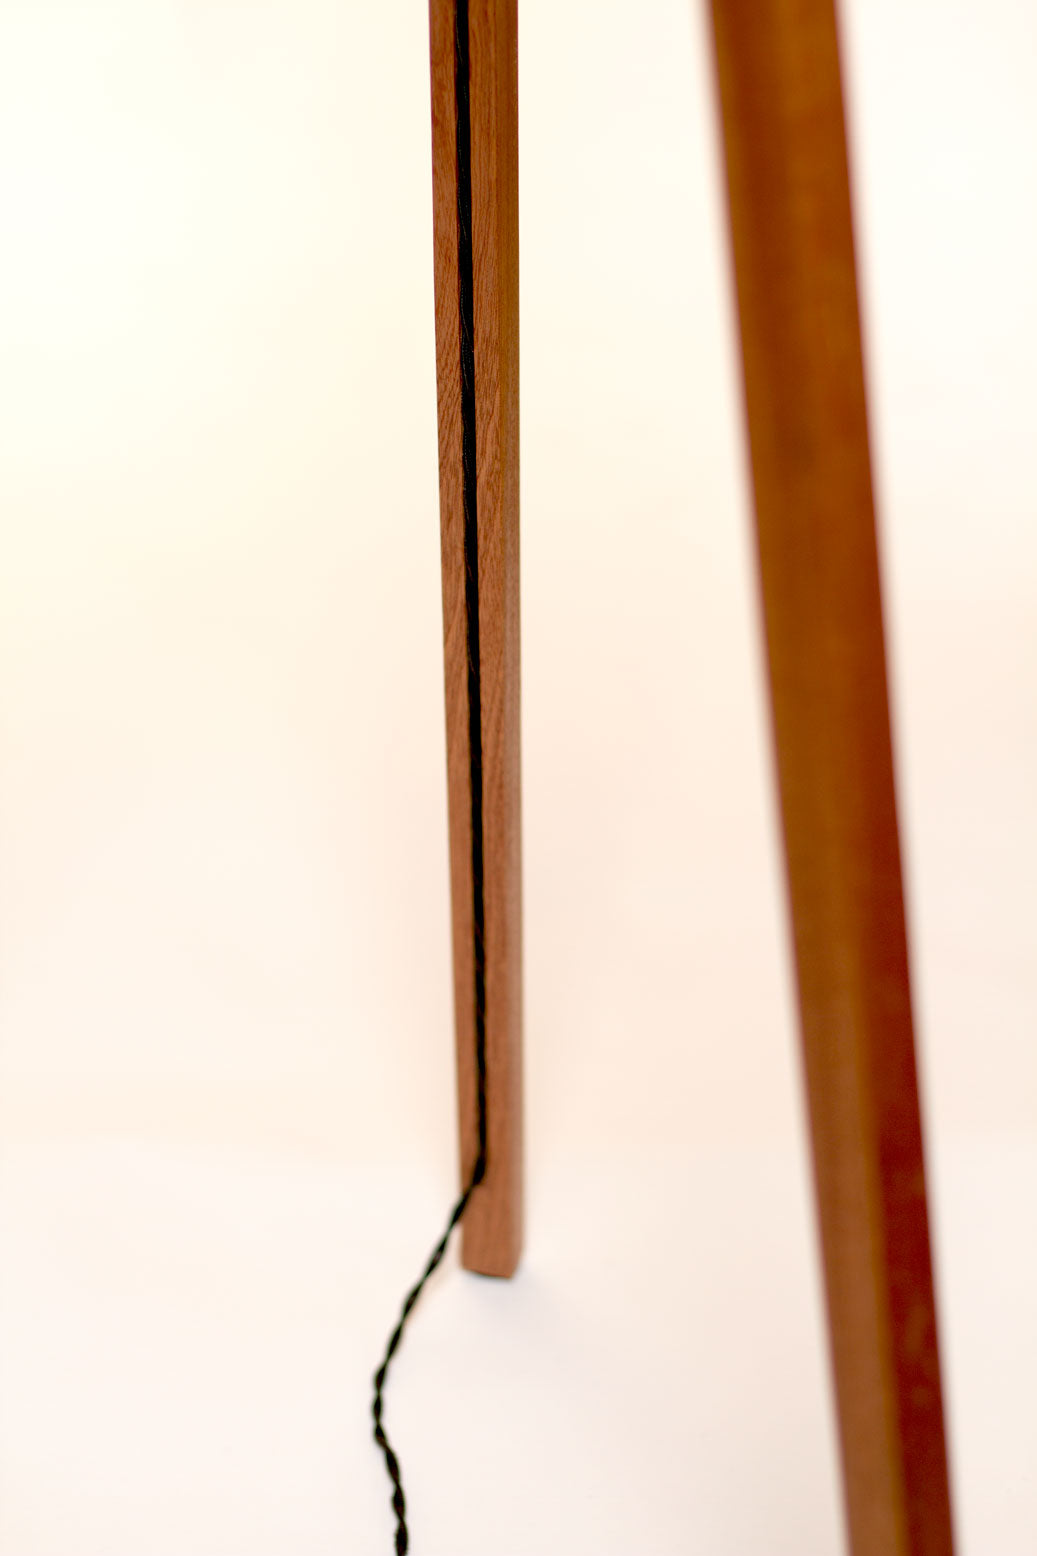 Sapele Tripod Floor Lamp - P09 - Batik Peony on Natural